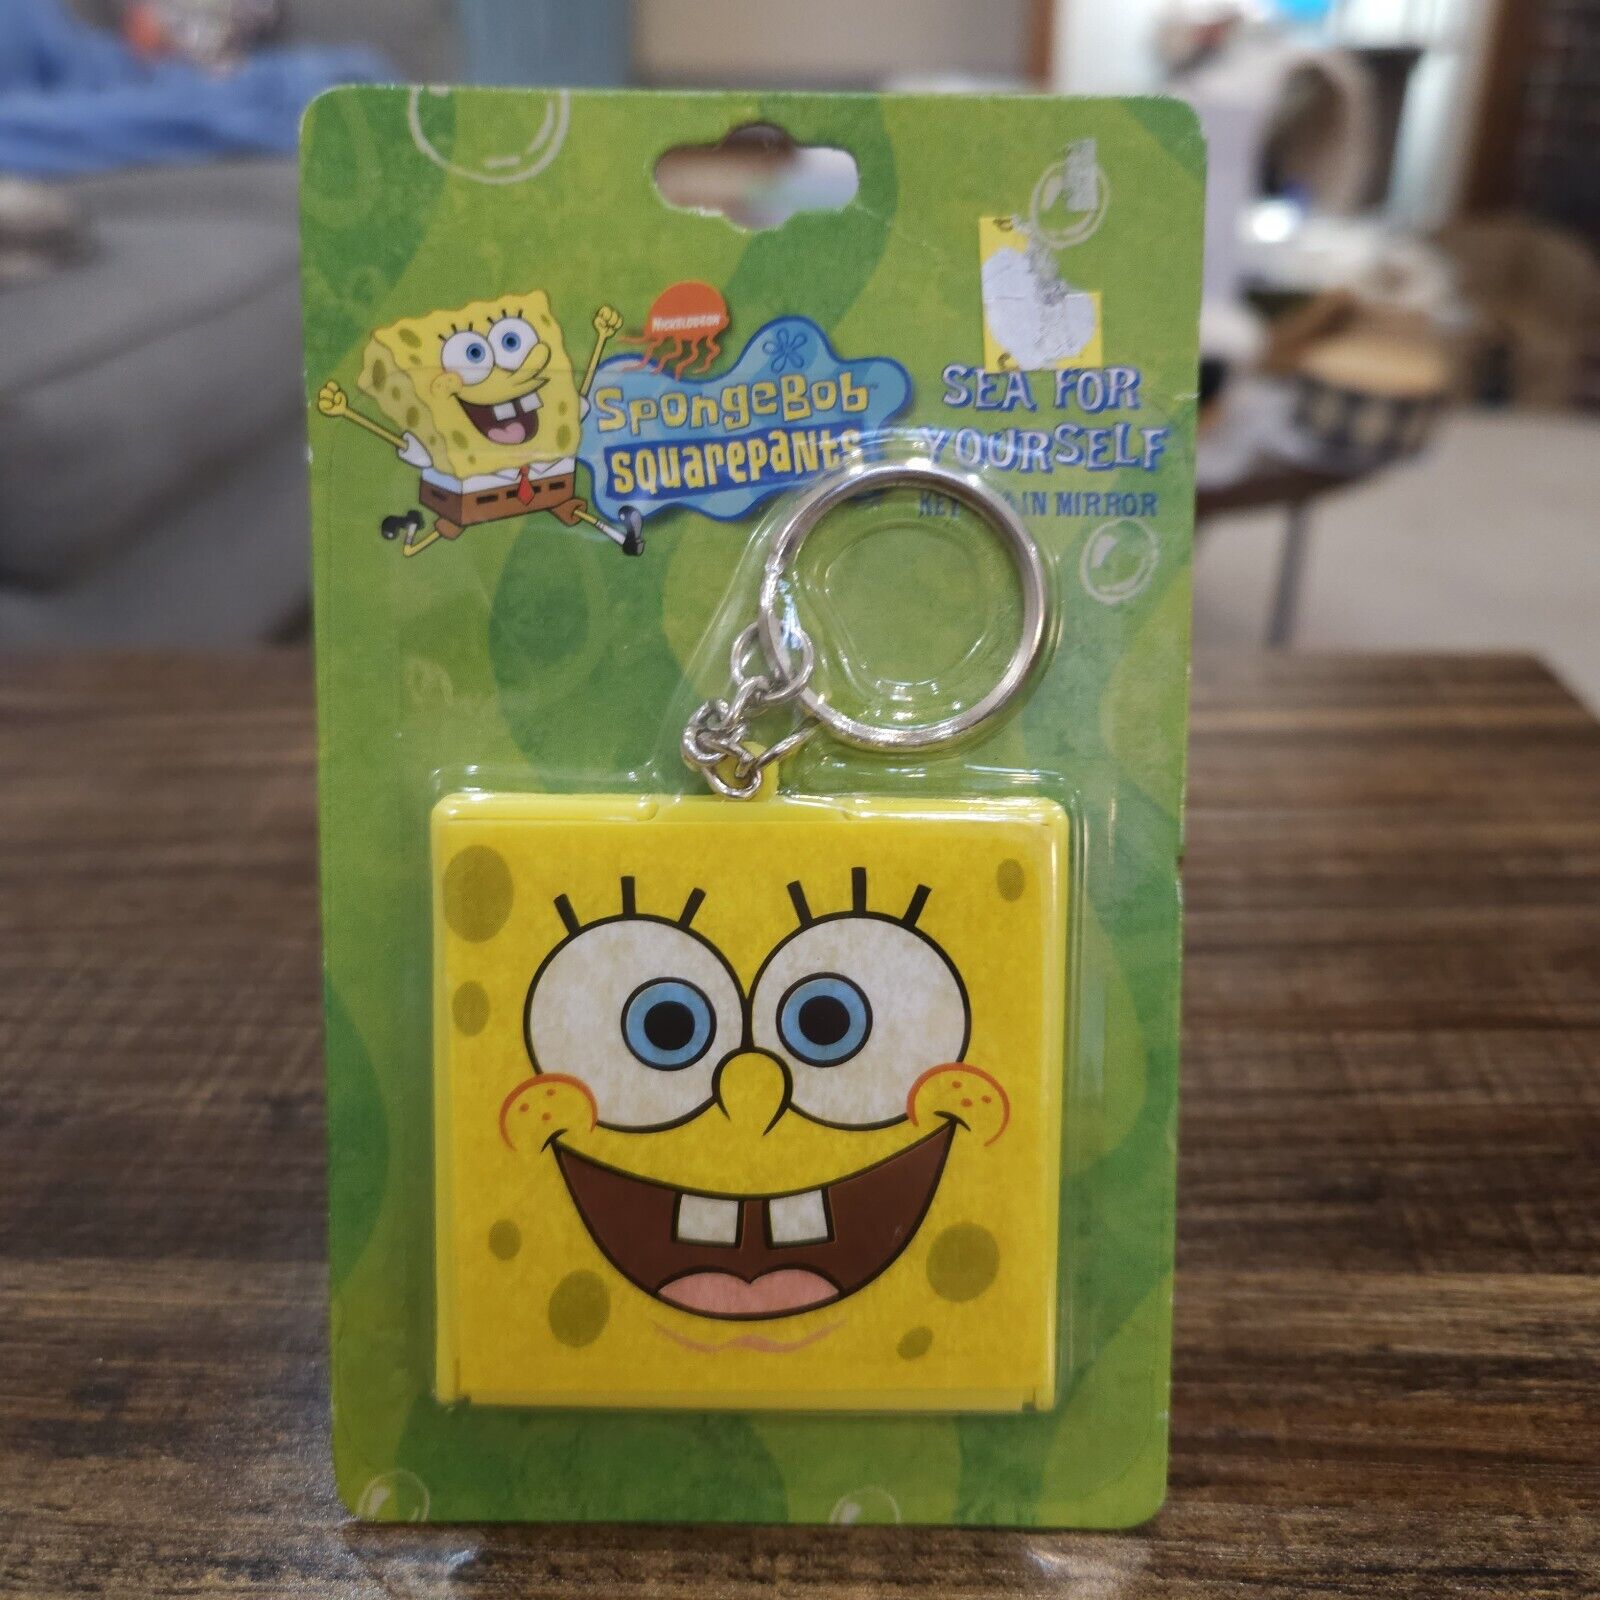 SpongeBob SquarePants Keychain Mirror 2004